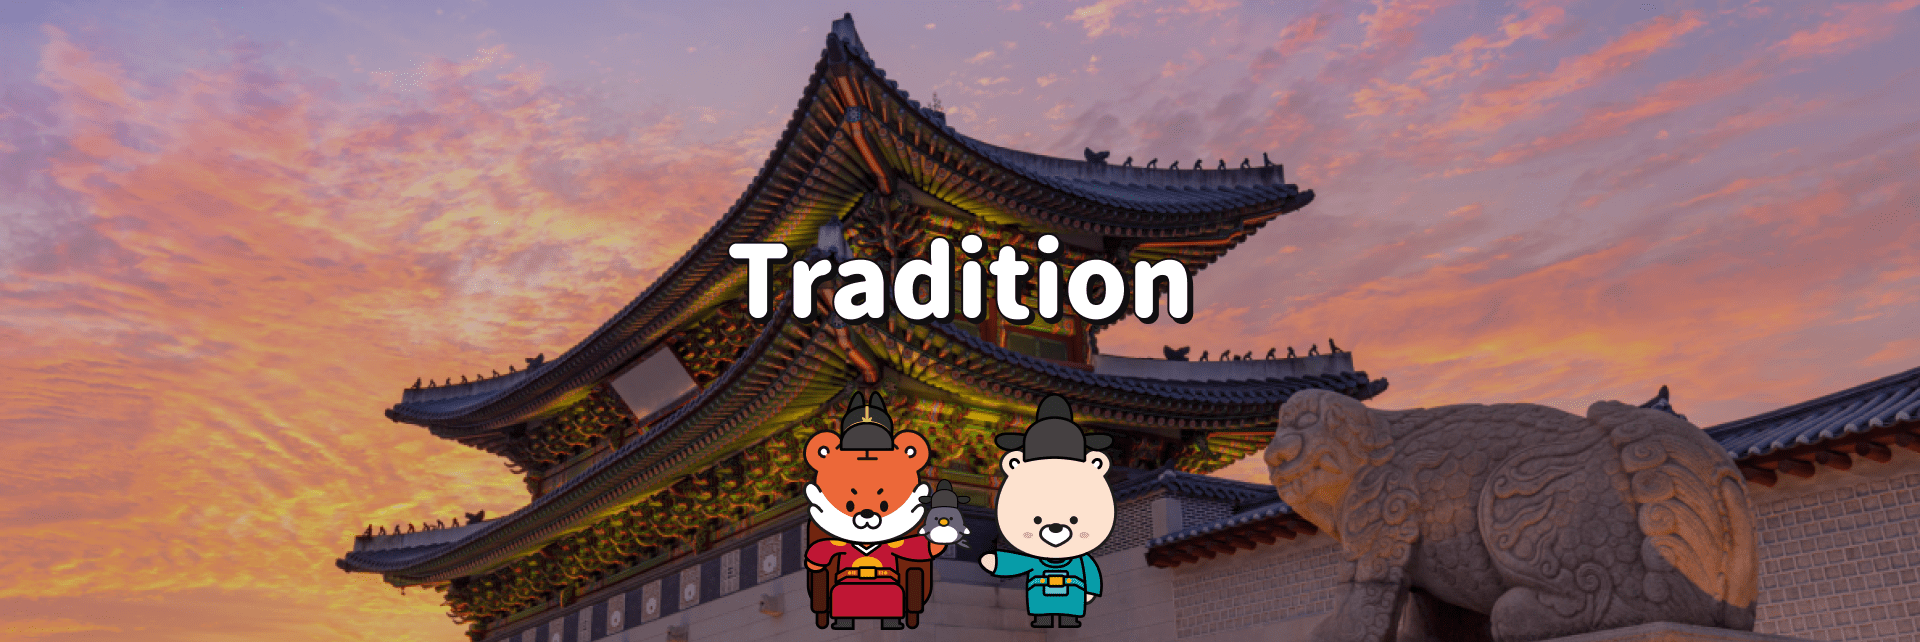 Tradition Free Transit Tours Korea Tourism Organization